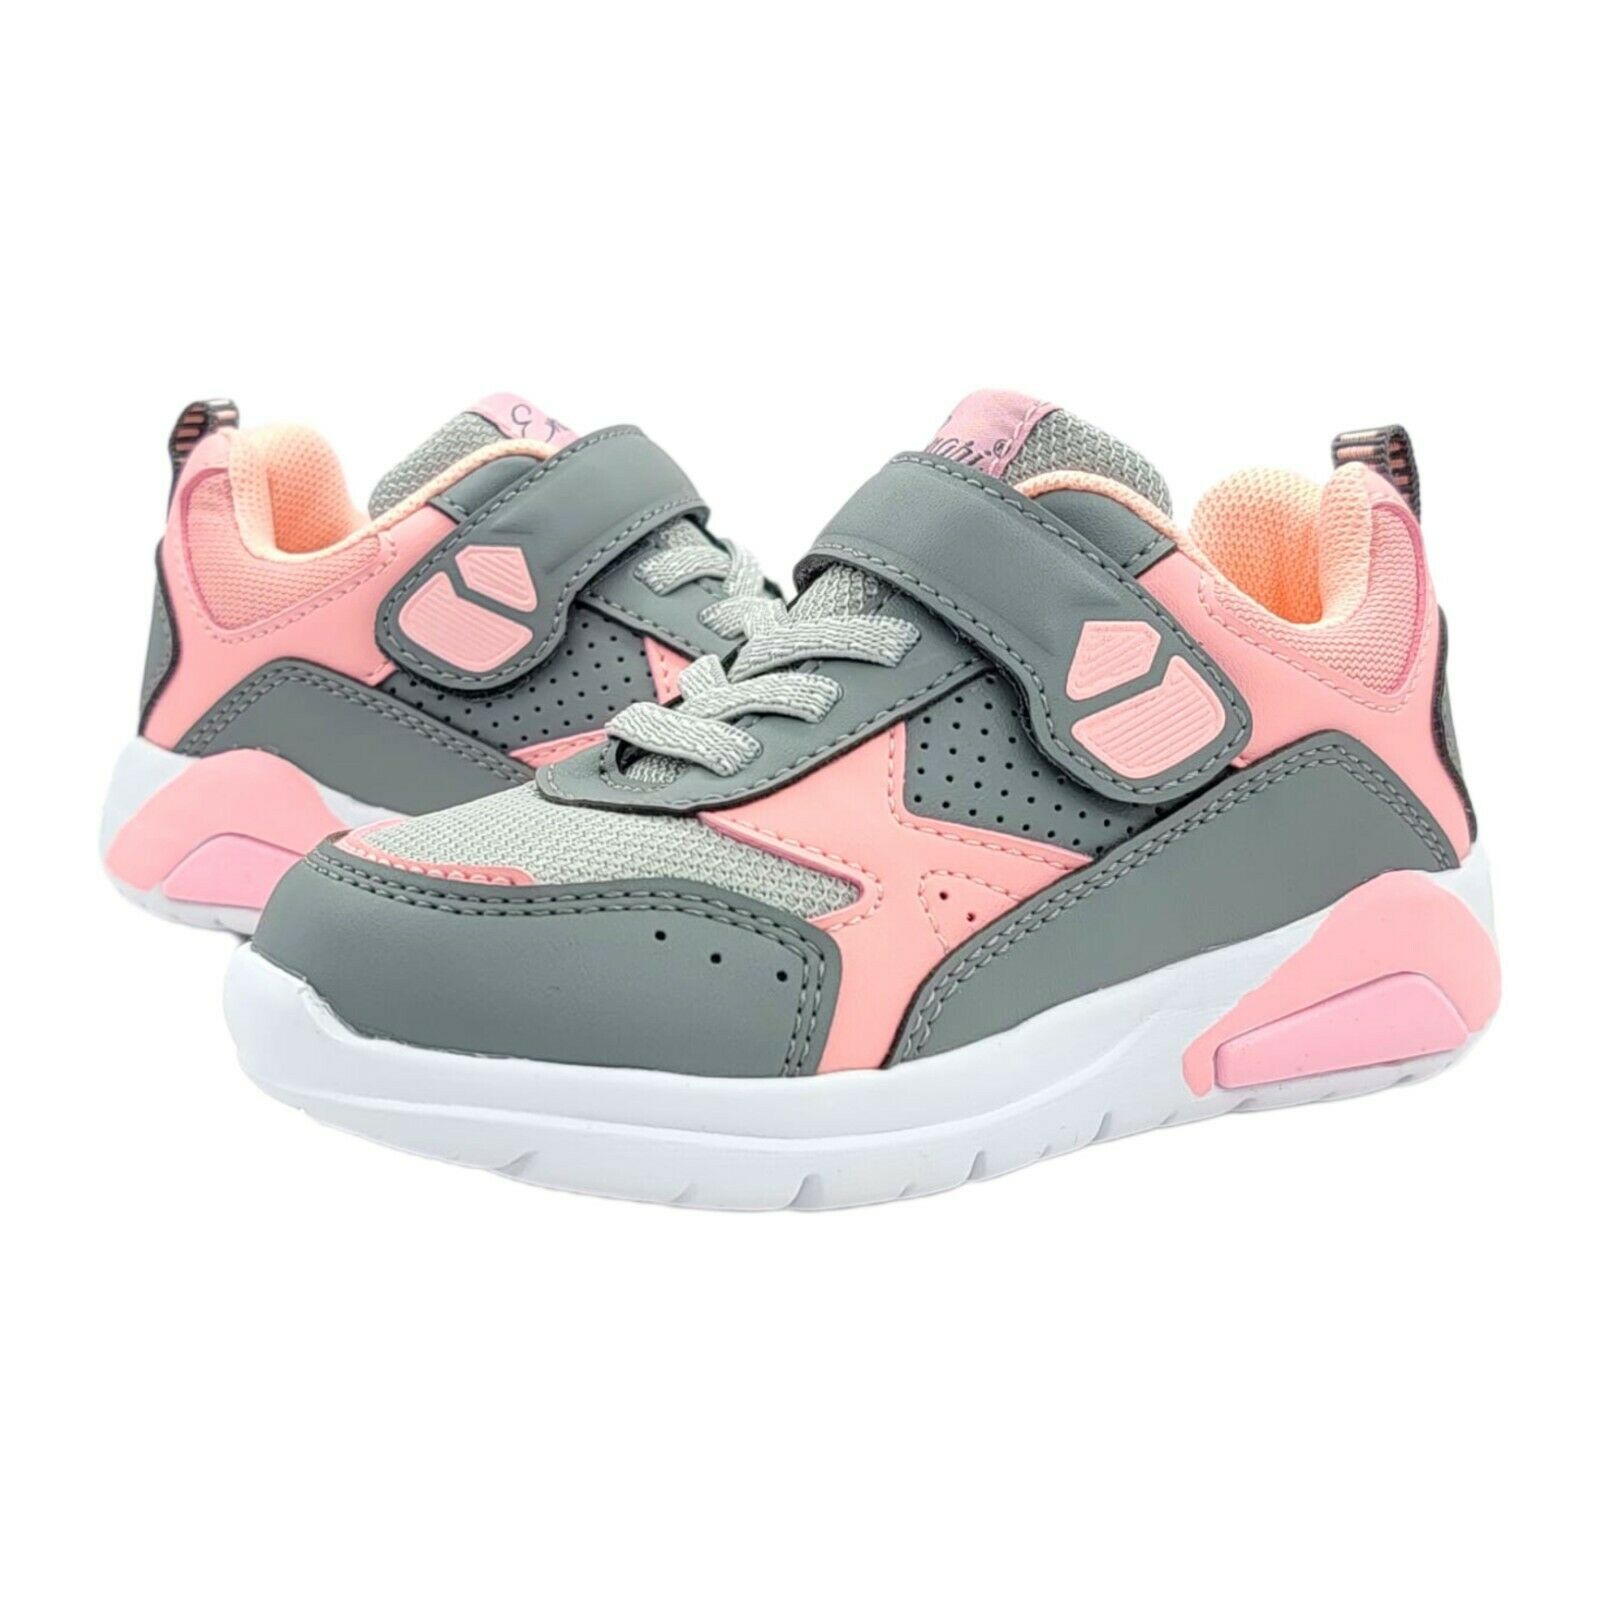 ENARI Baby Toddler Girl Sneakers Shoes Size 6